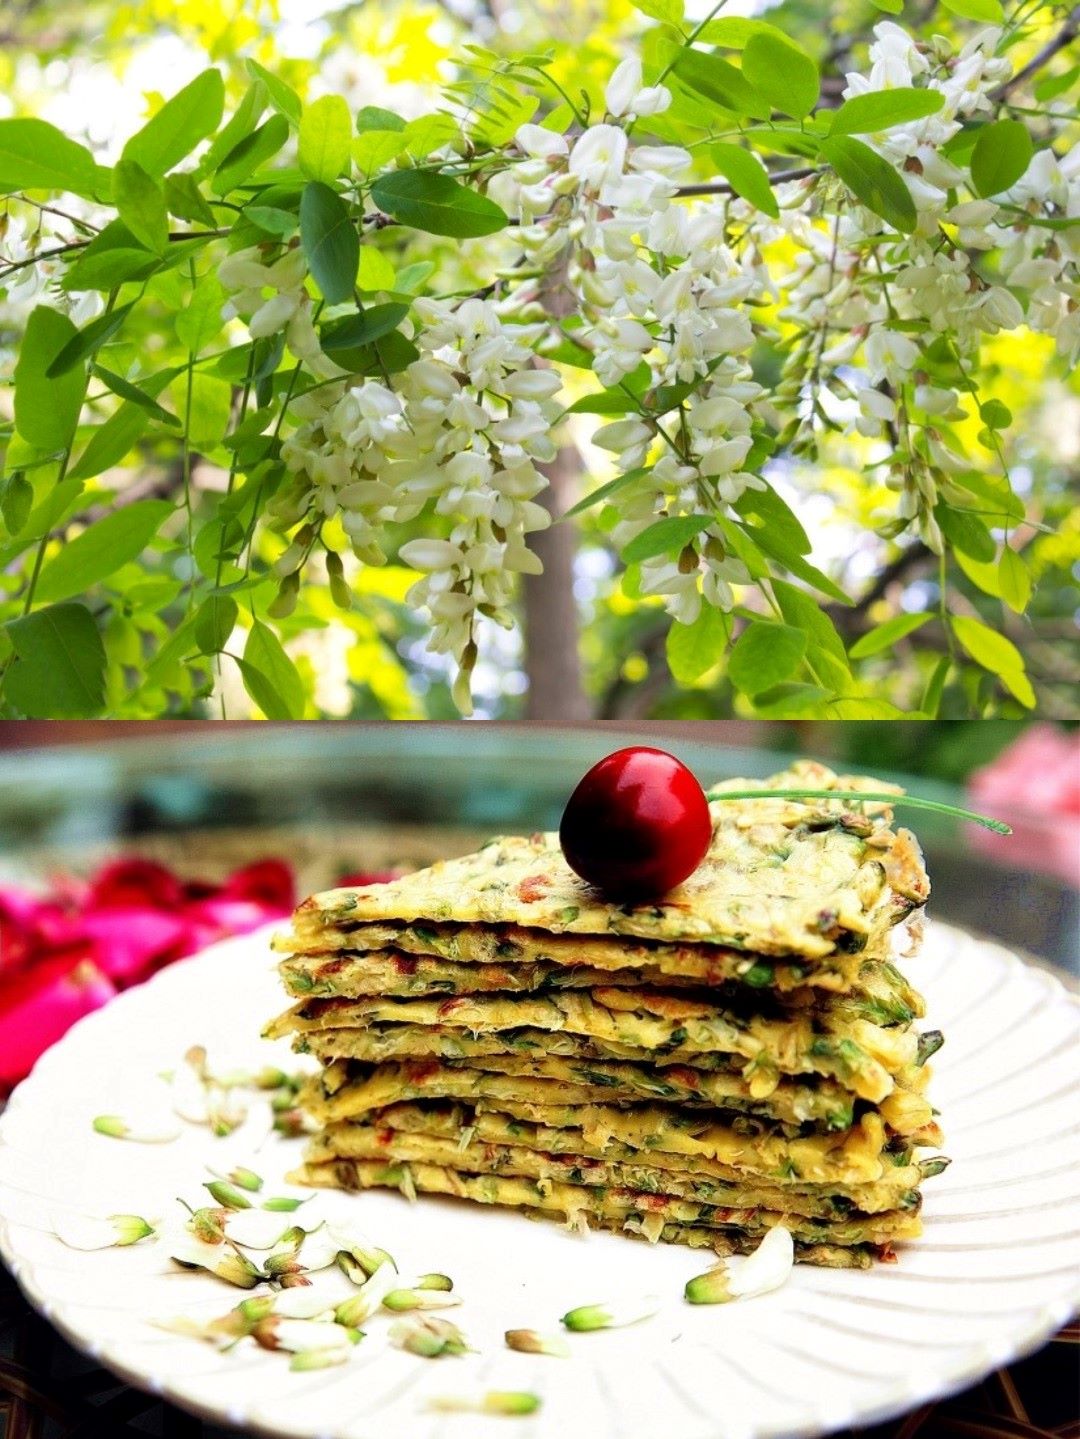 Acacia flower Pancake Recipe healthy breakfast 2020